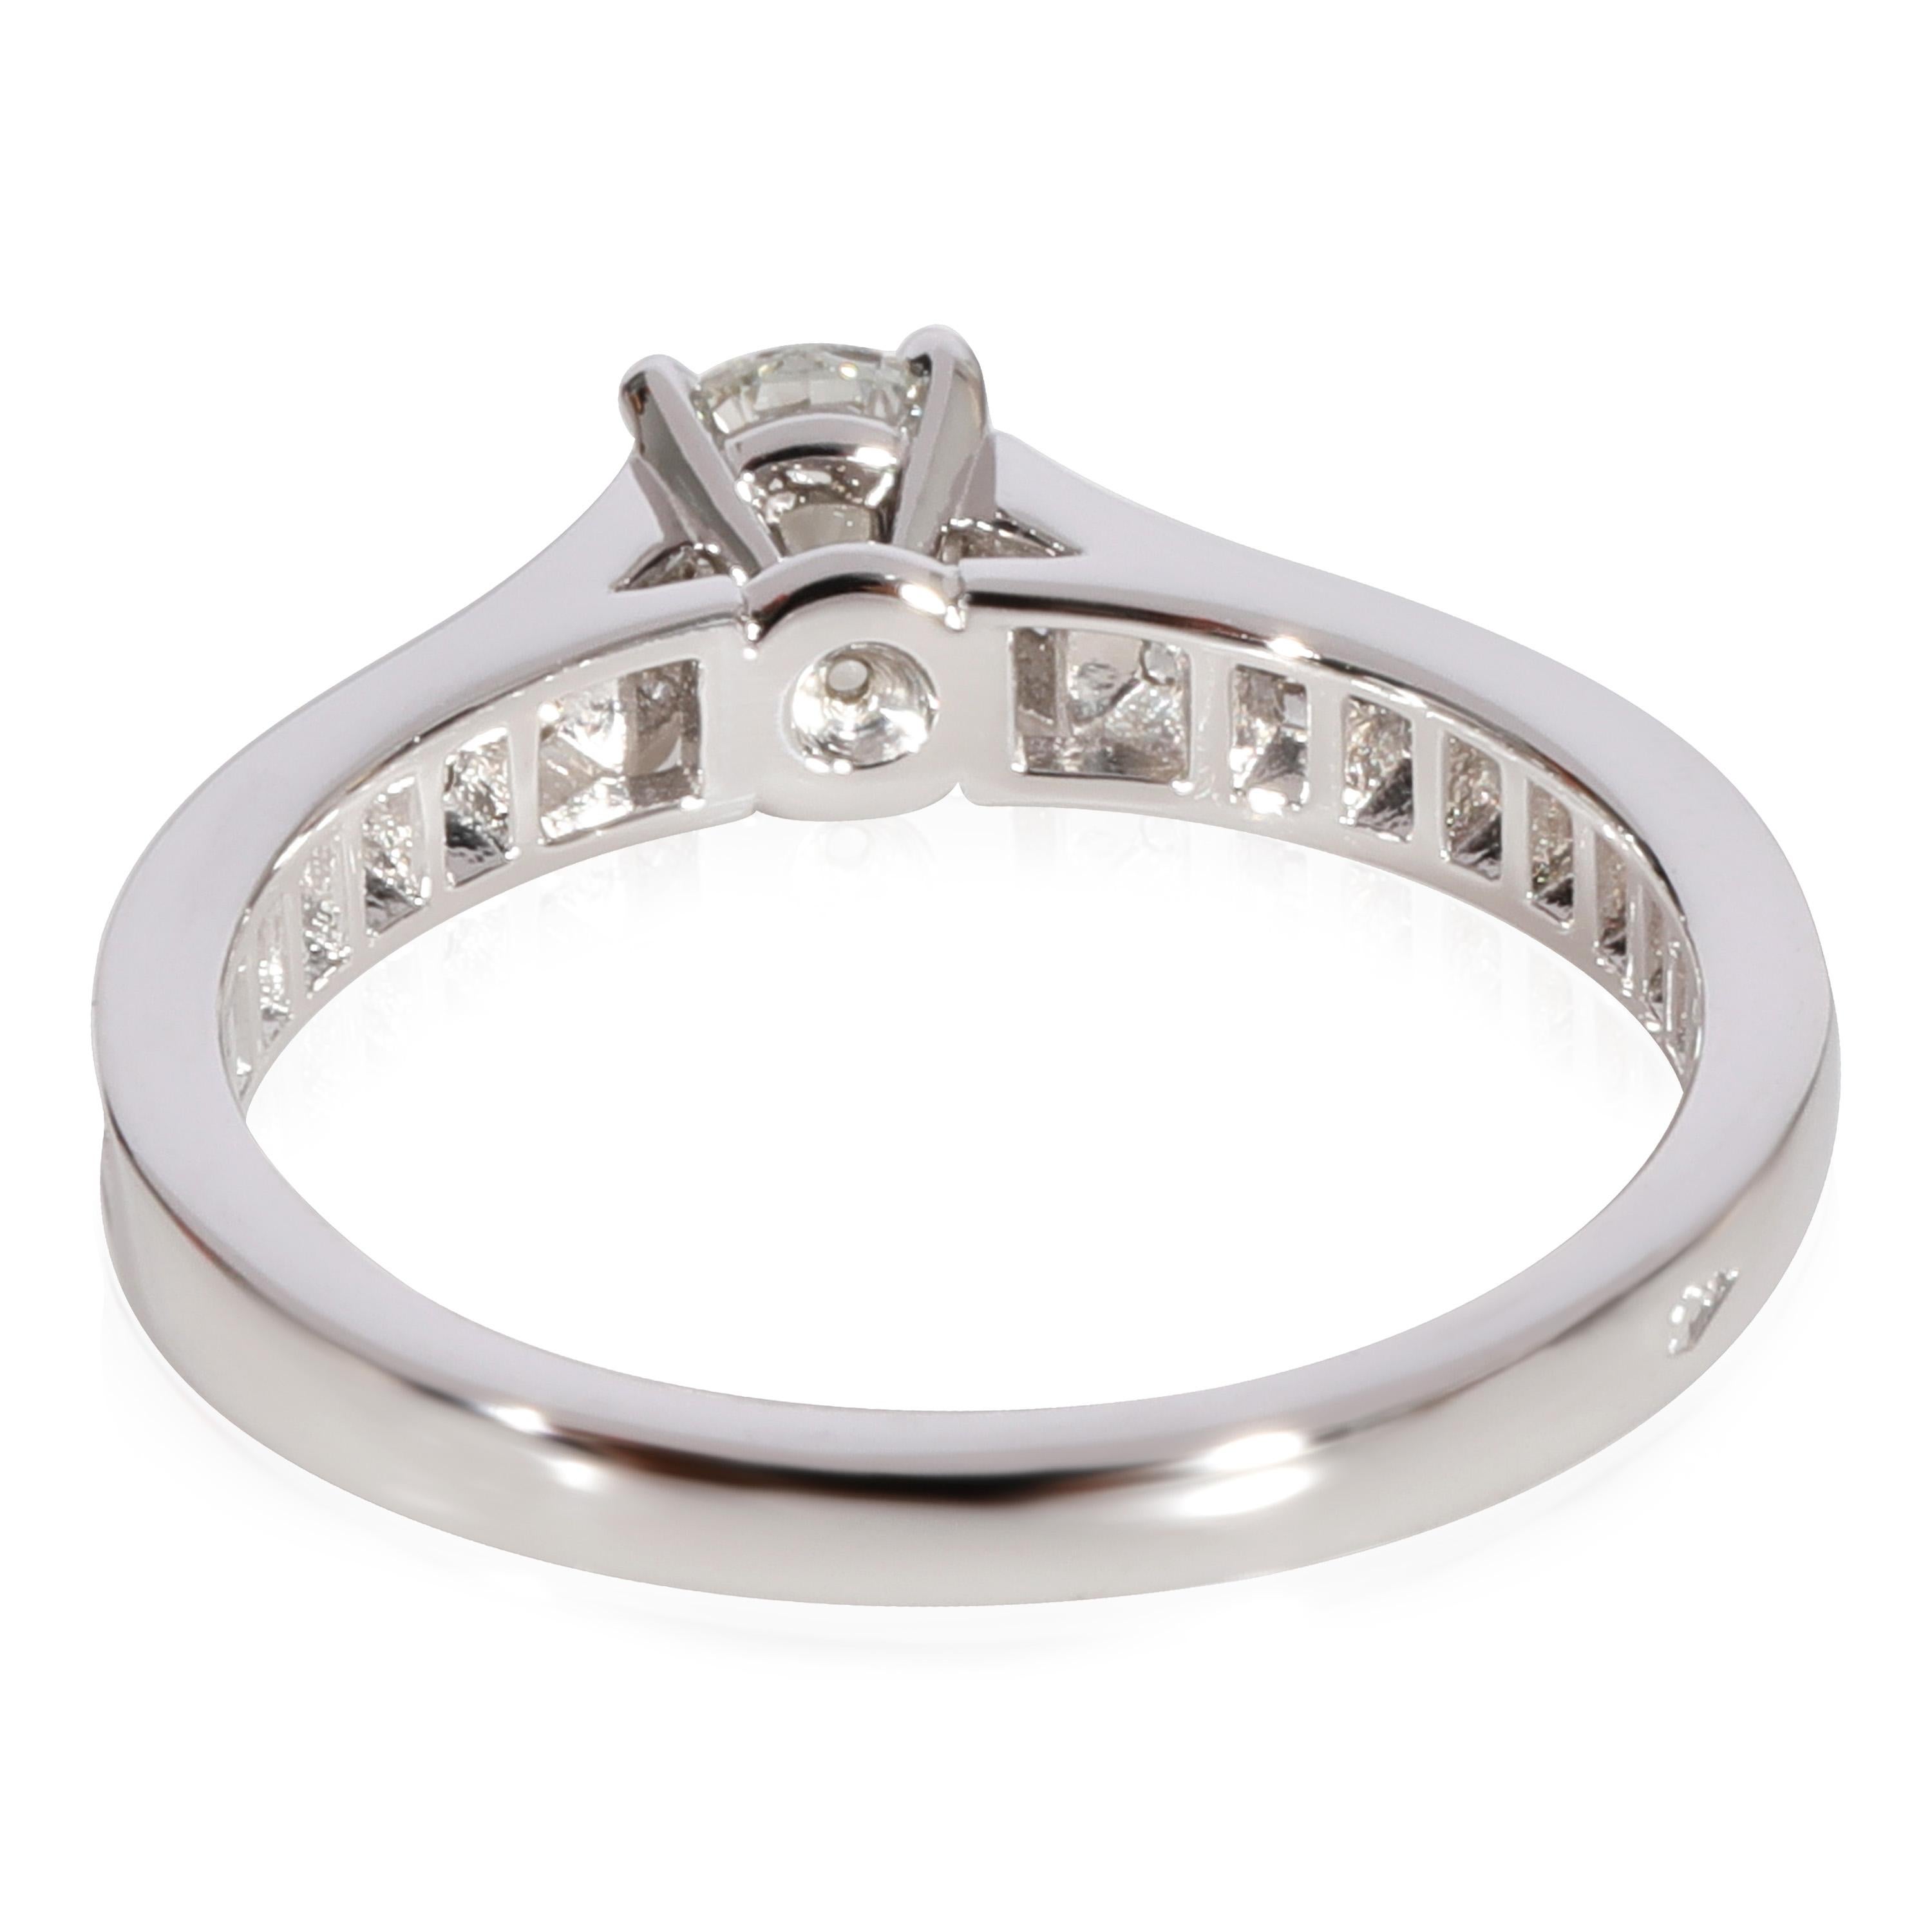 Cartier 1895 Diamond  Engagement Ring in 950 Platinum G VS1 0.66 CTW

PRIMARY DETAILS
SKU: 123484
Listing Title: Cartier 1895 Diamond  Engagement Ring in 950 Platinum G VS1 0.66 CTW
Condition Description: Retails for 6100 USD. In excellent condition